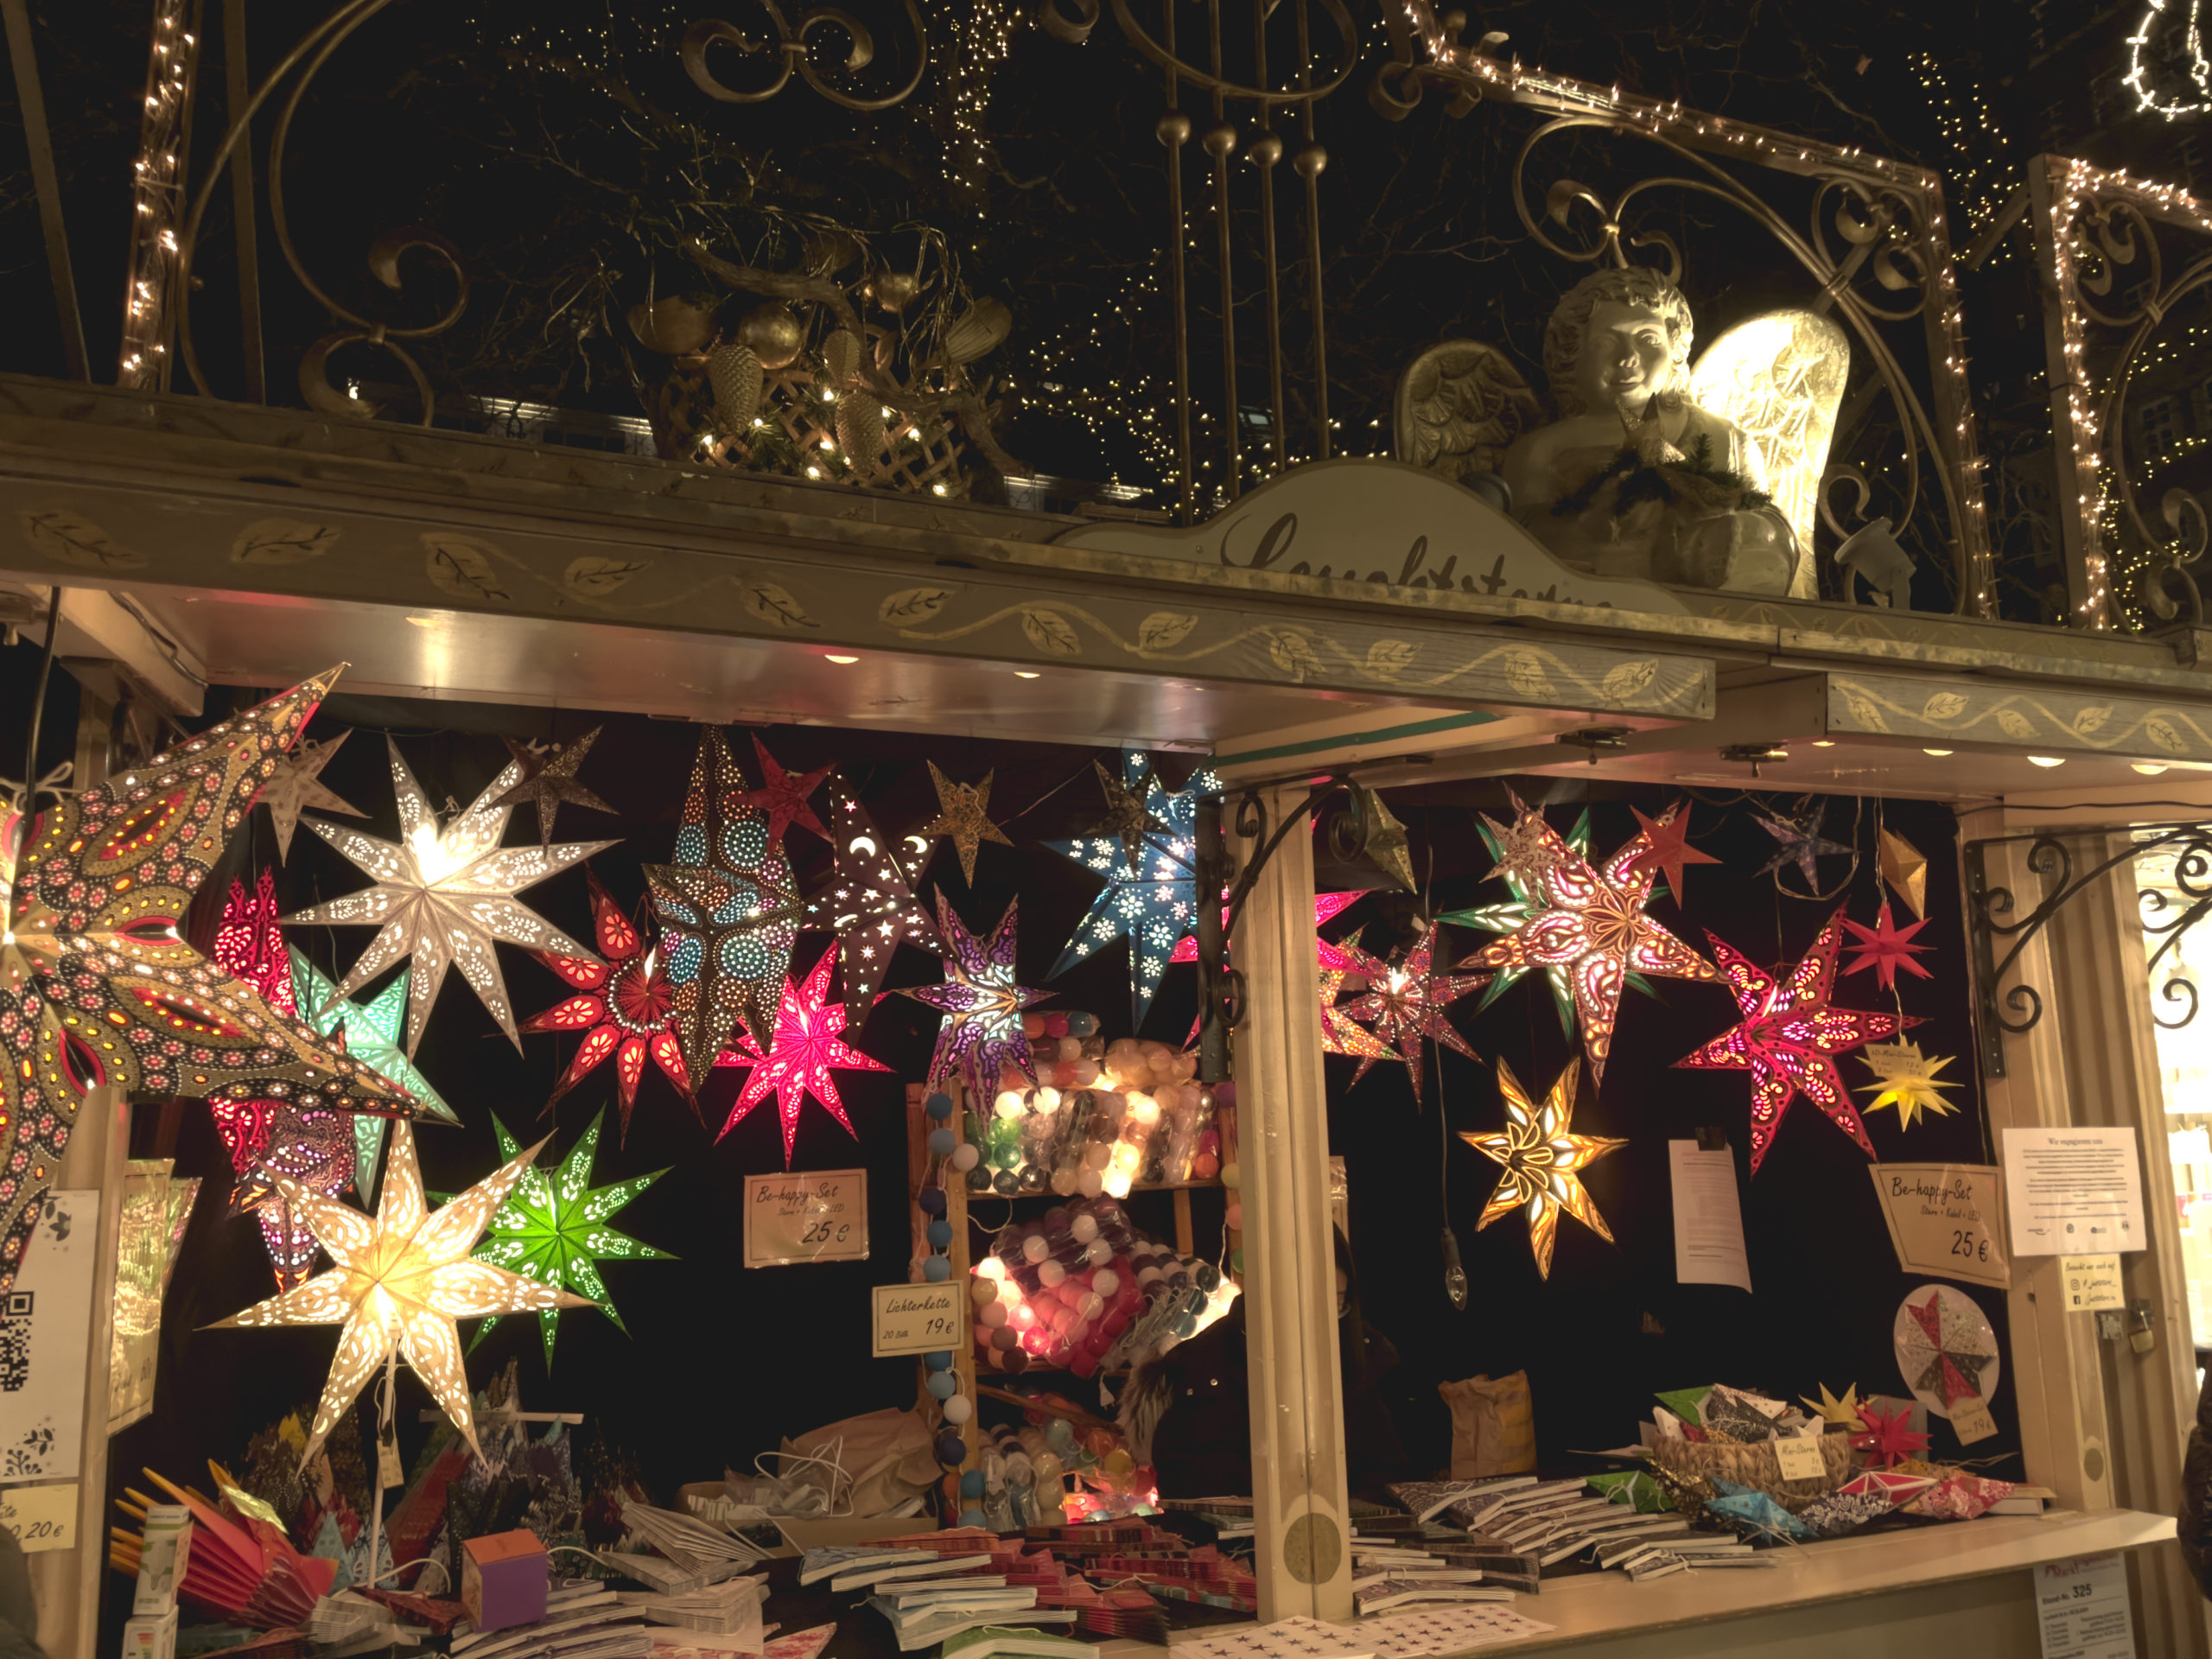 Engelchen Markt: Christmas market is one of the most magical Christmas markets in Düsseldorf